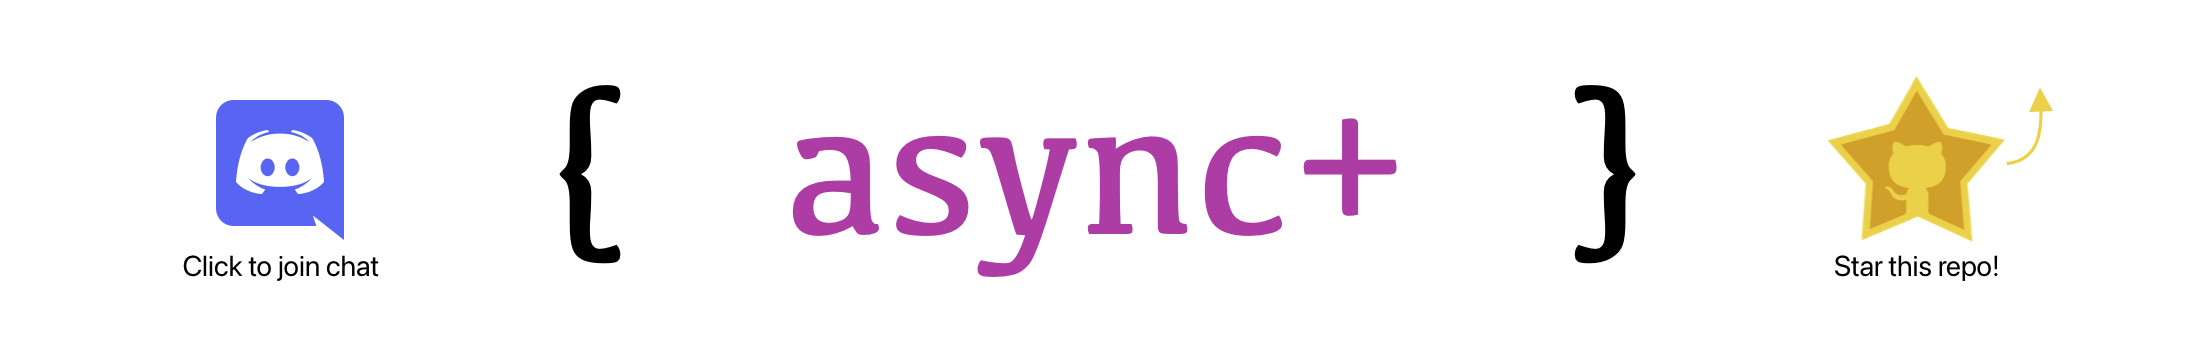 async+